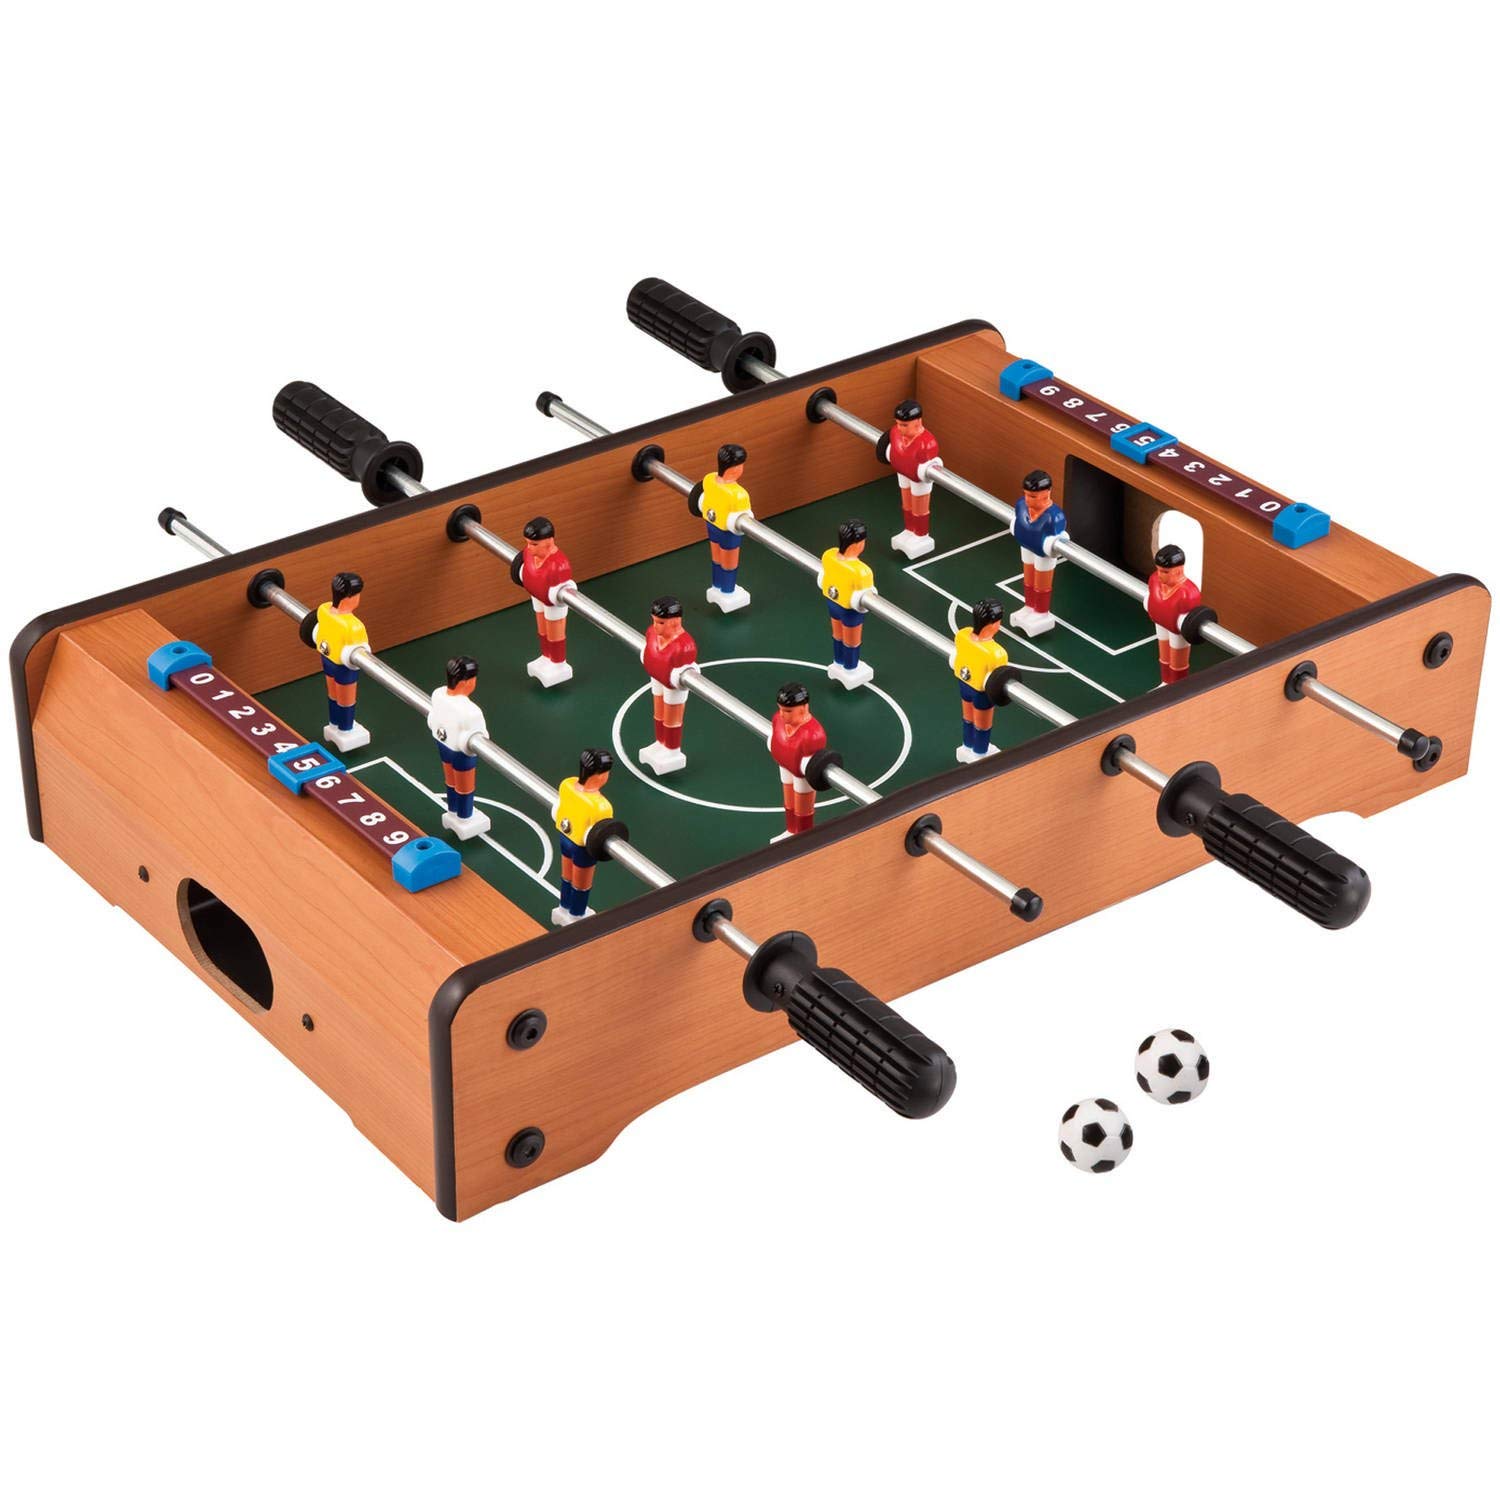 Cable World® Mid-sized Foosball Mini Football Table